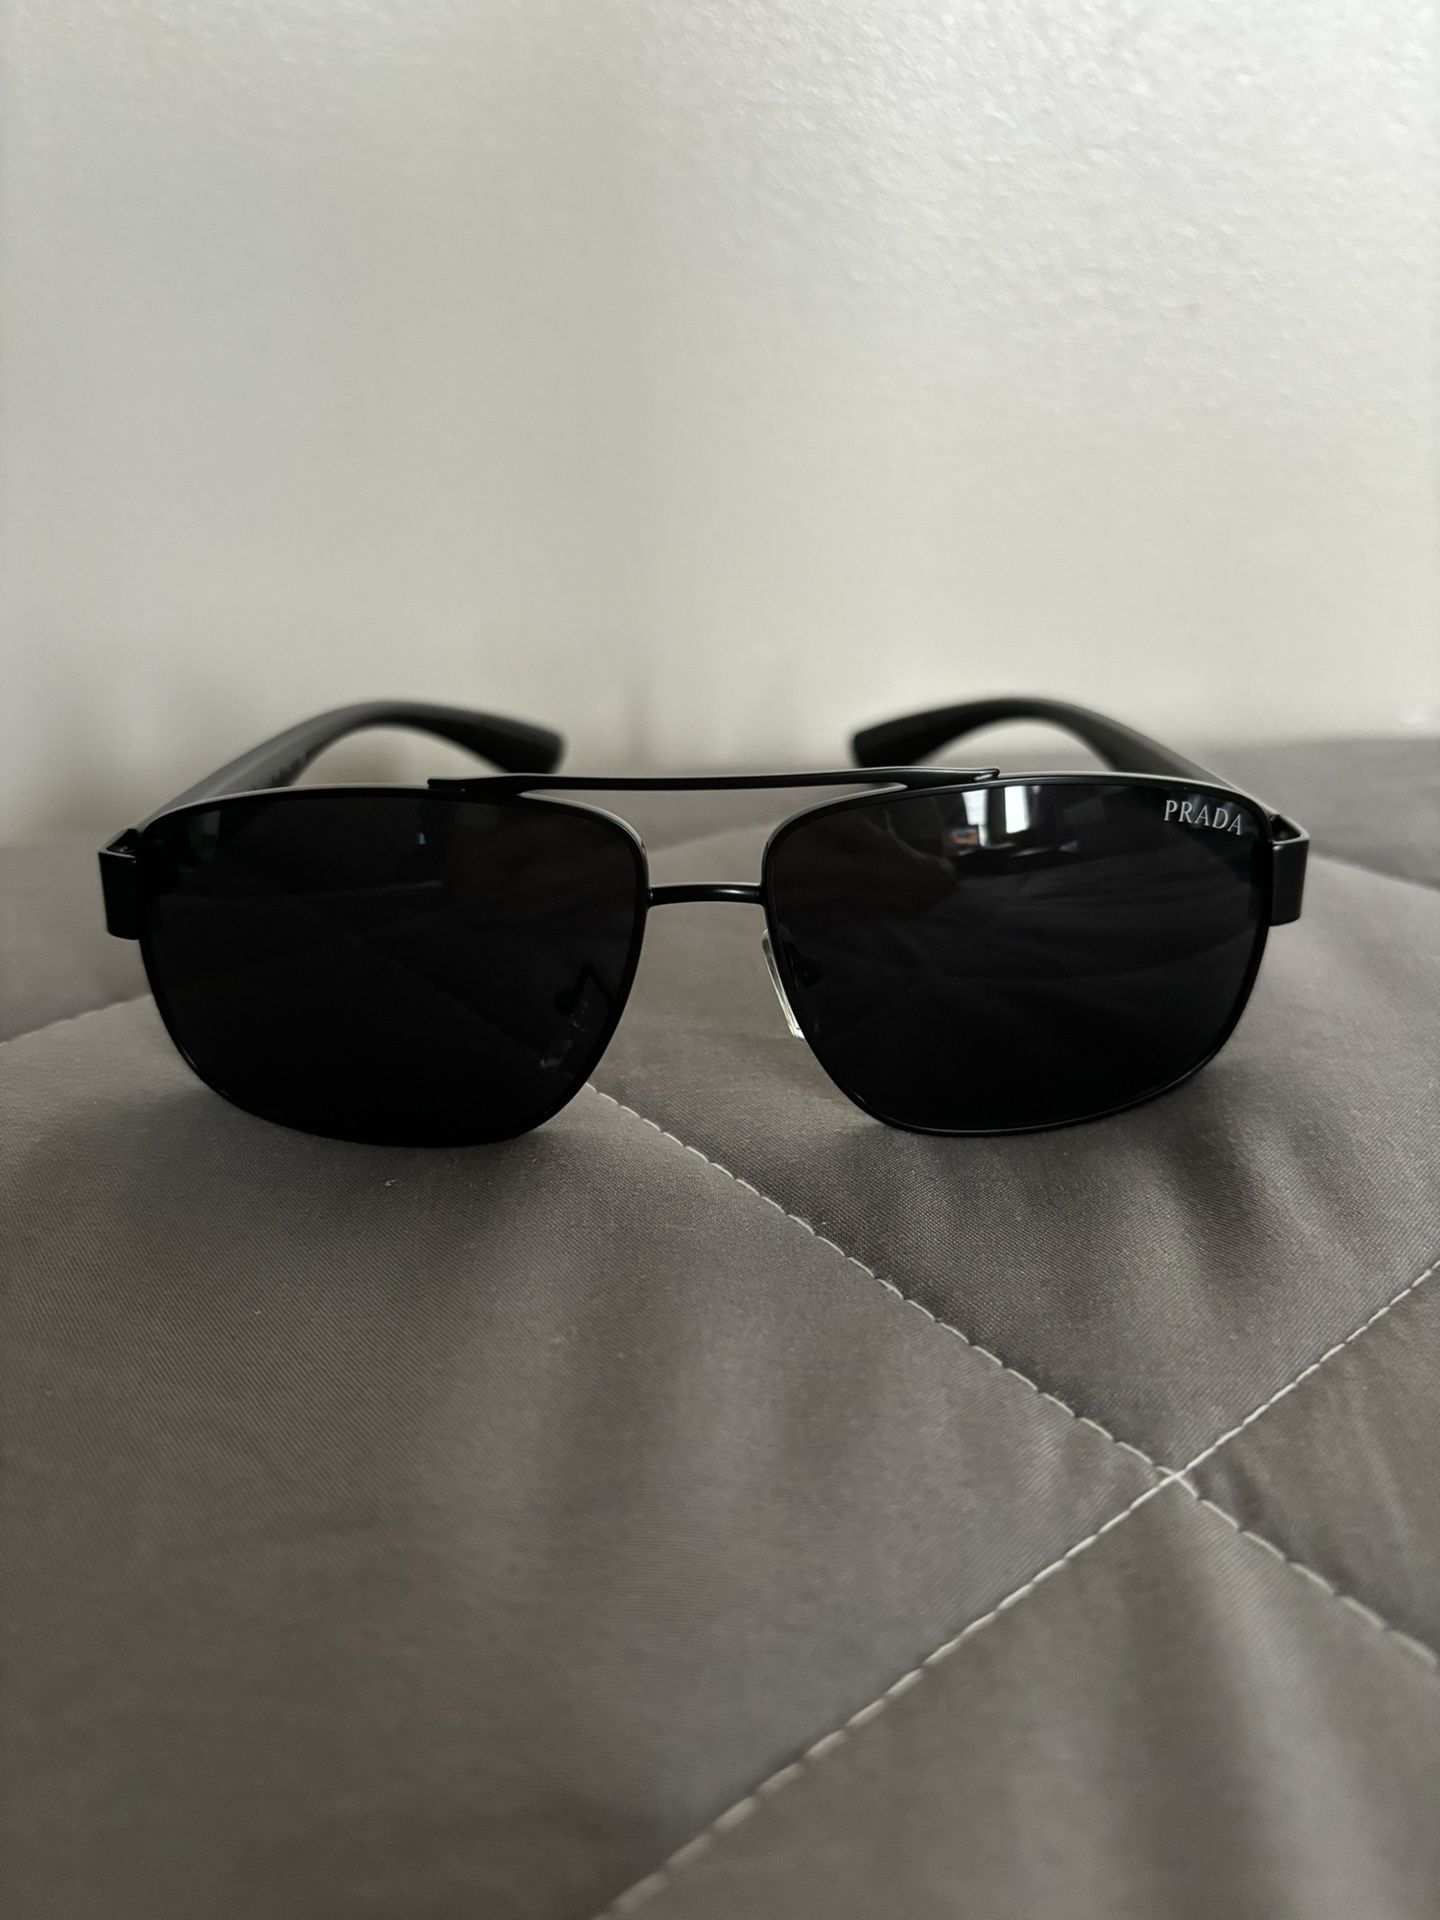 Men’s Prada Sunglasses New In Box